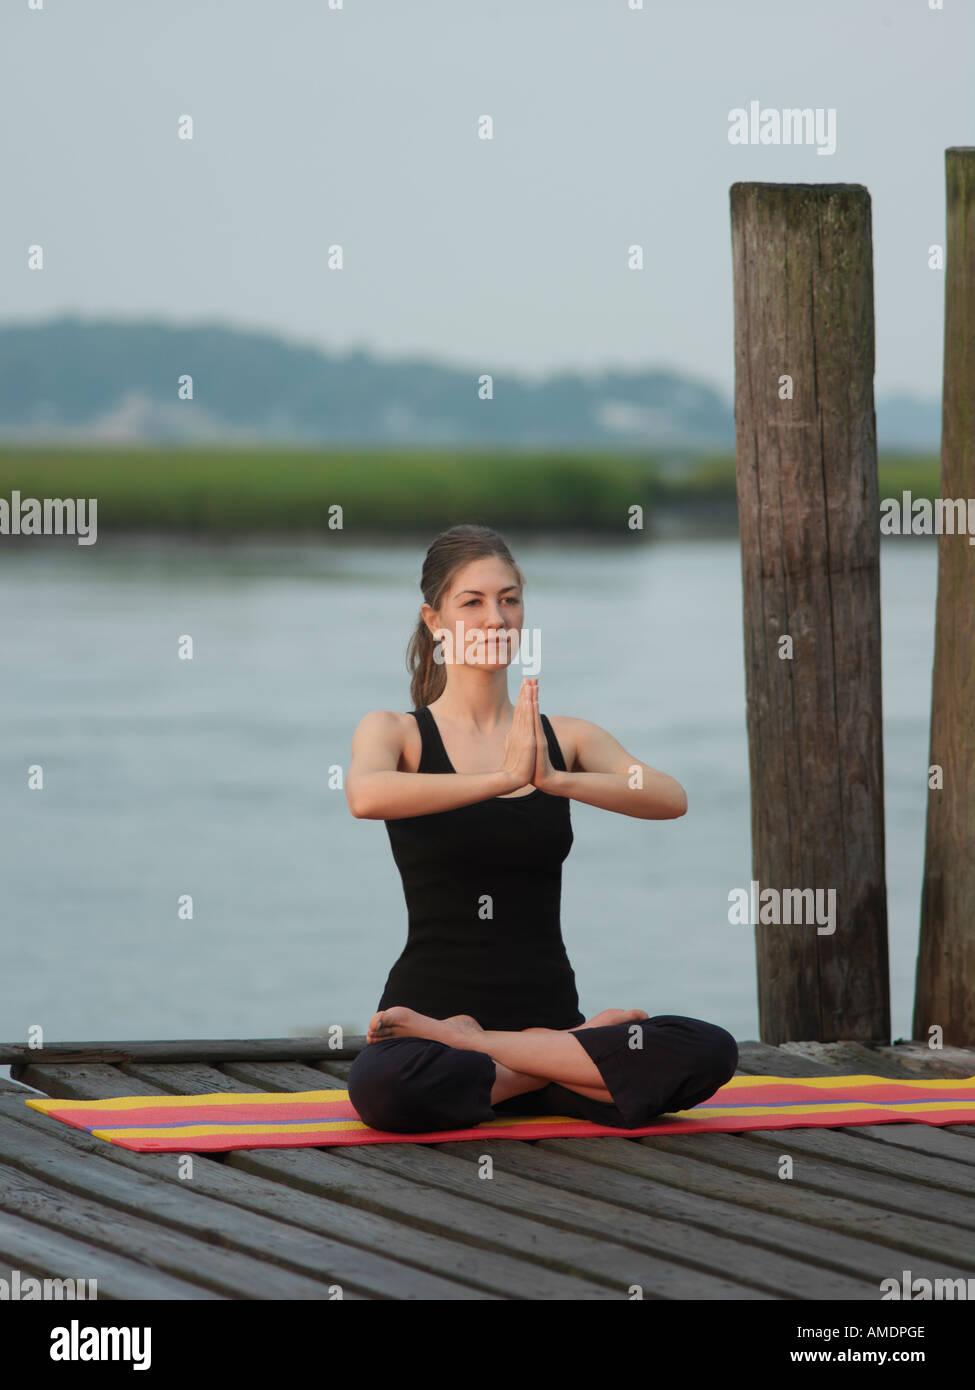 Woman doing yoga lotus position early morning on dock Virginia Beach VA Stock Photo